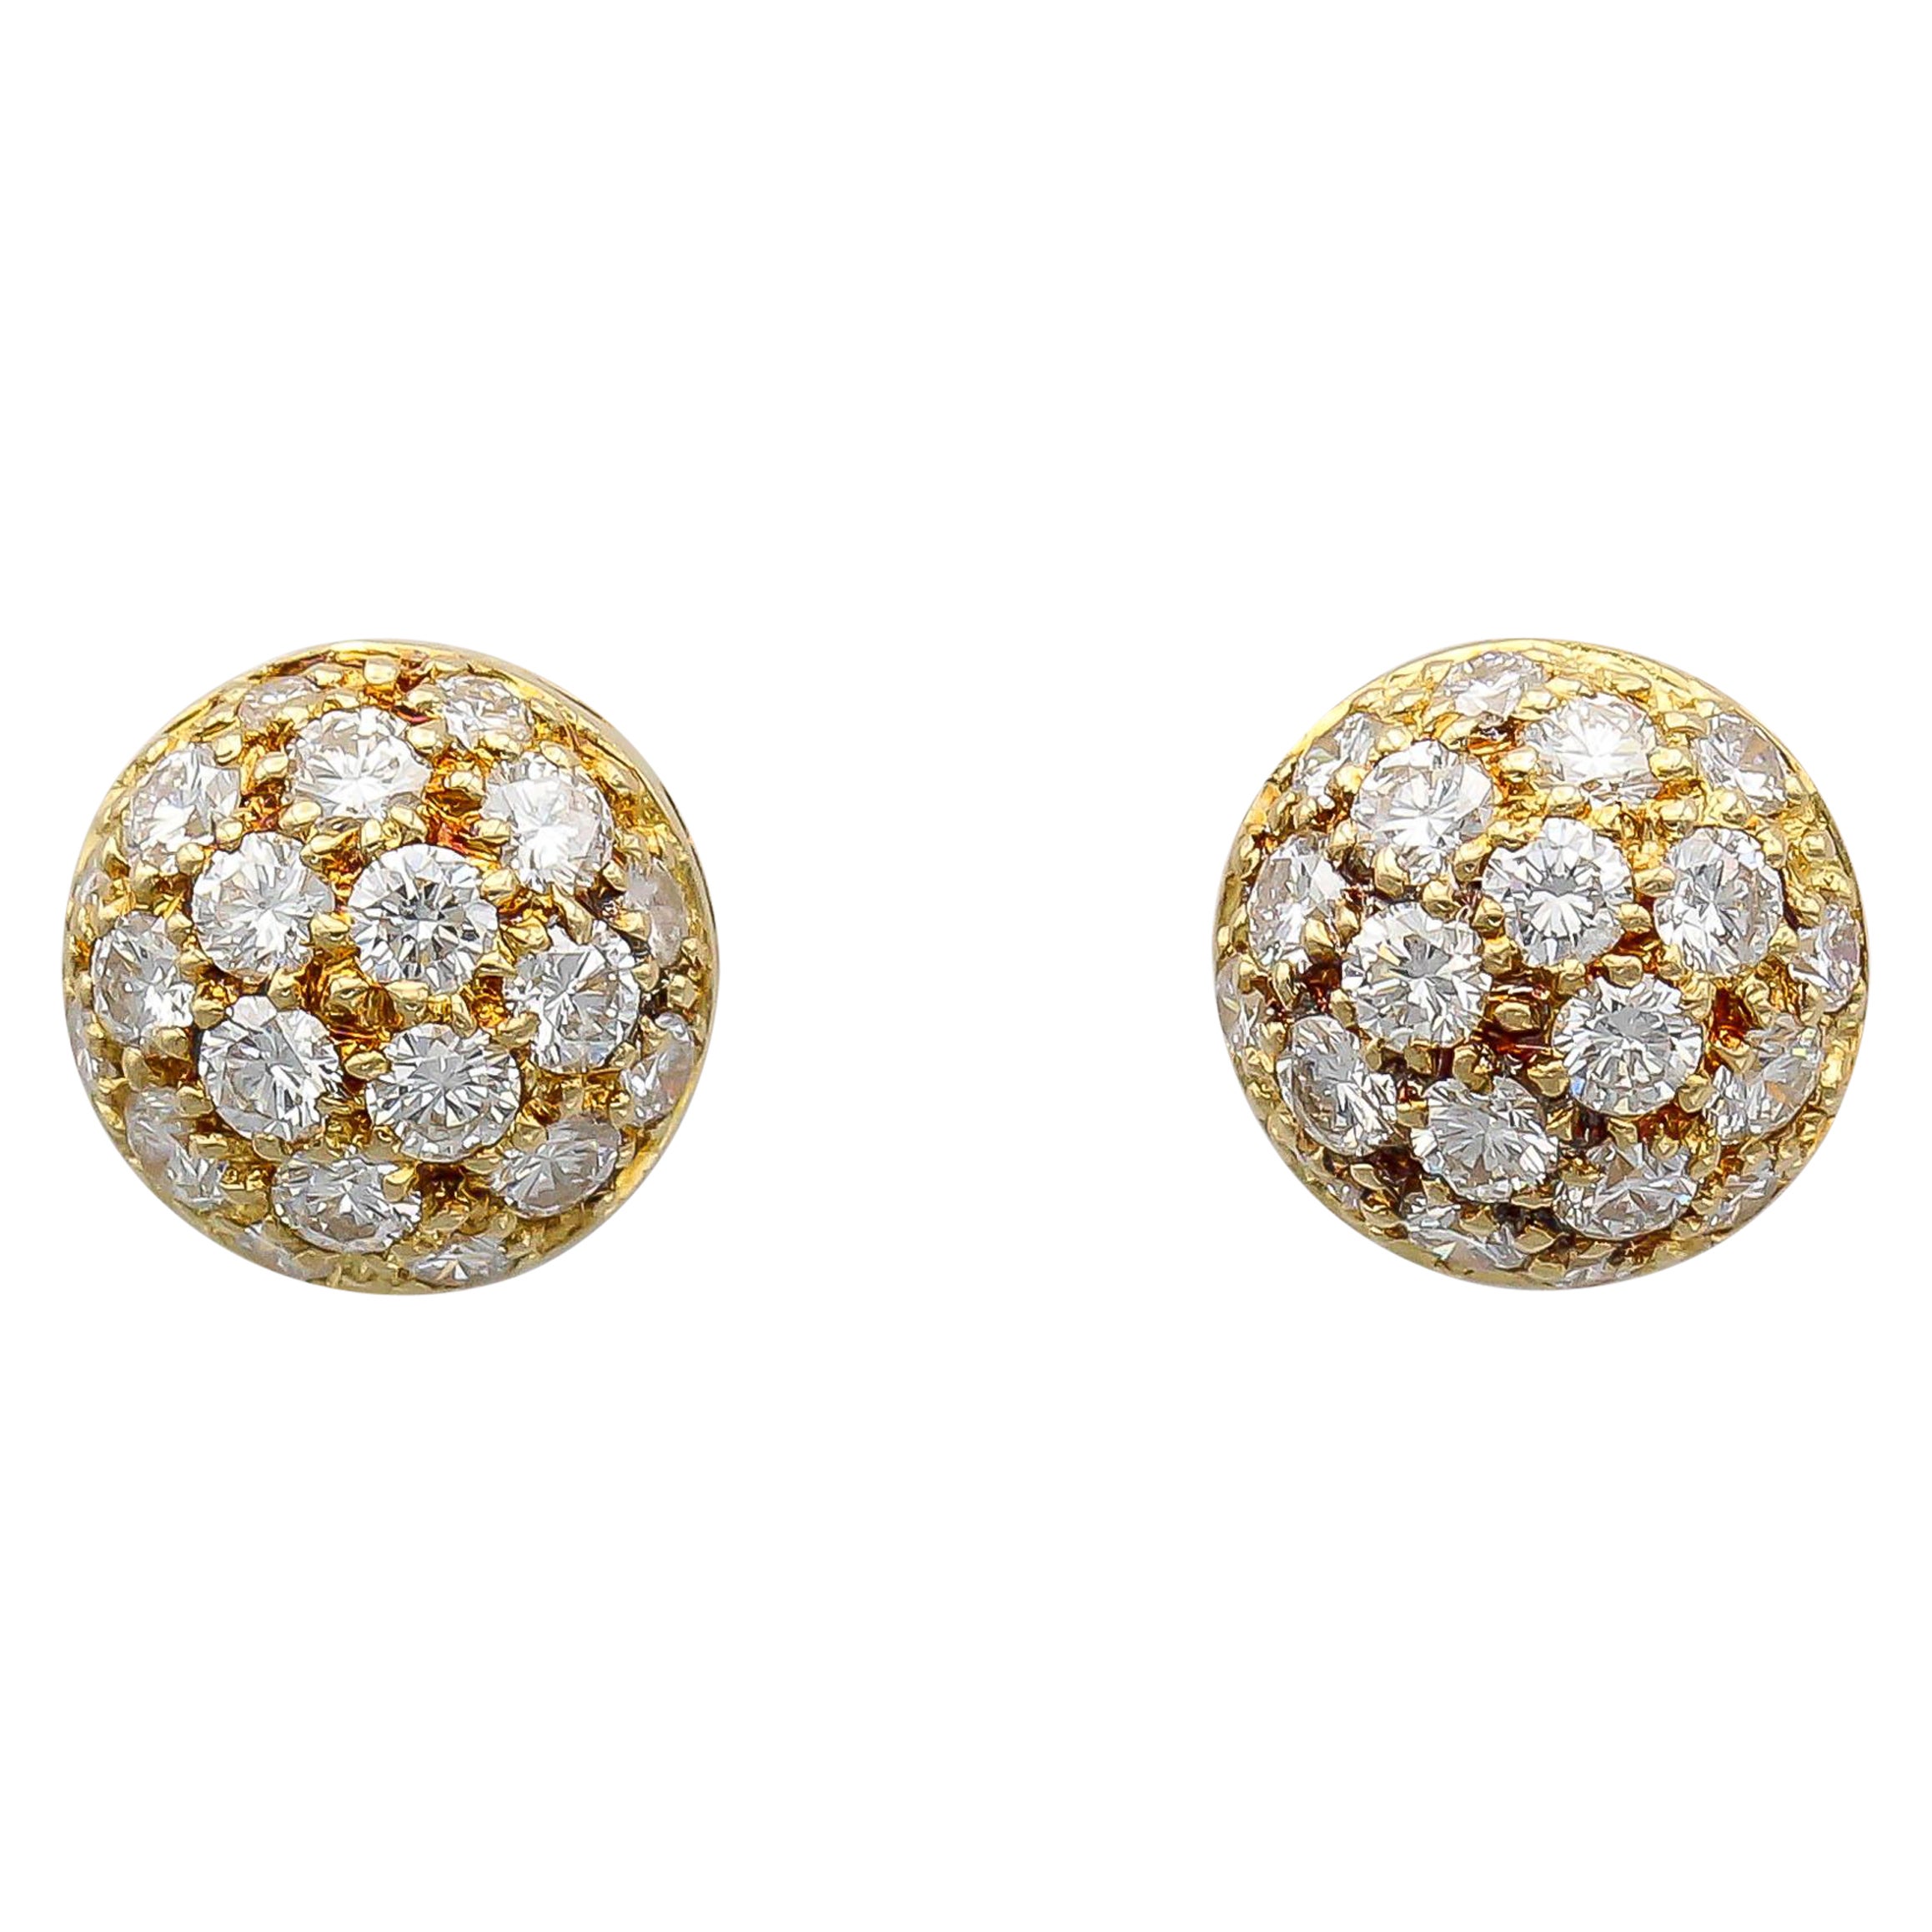 Cartier Diamond 18 Karat Gold Dome Earrings Studs